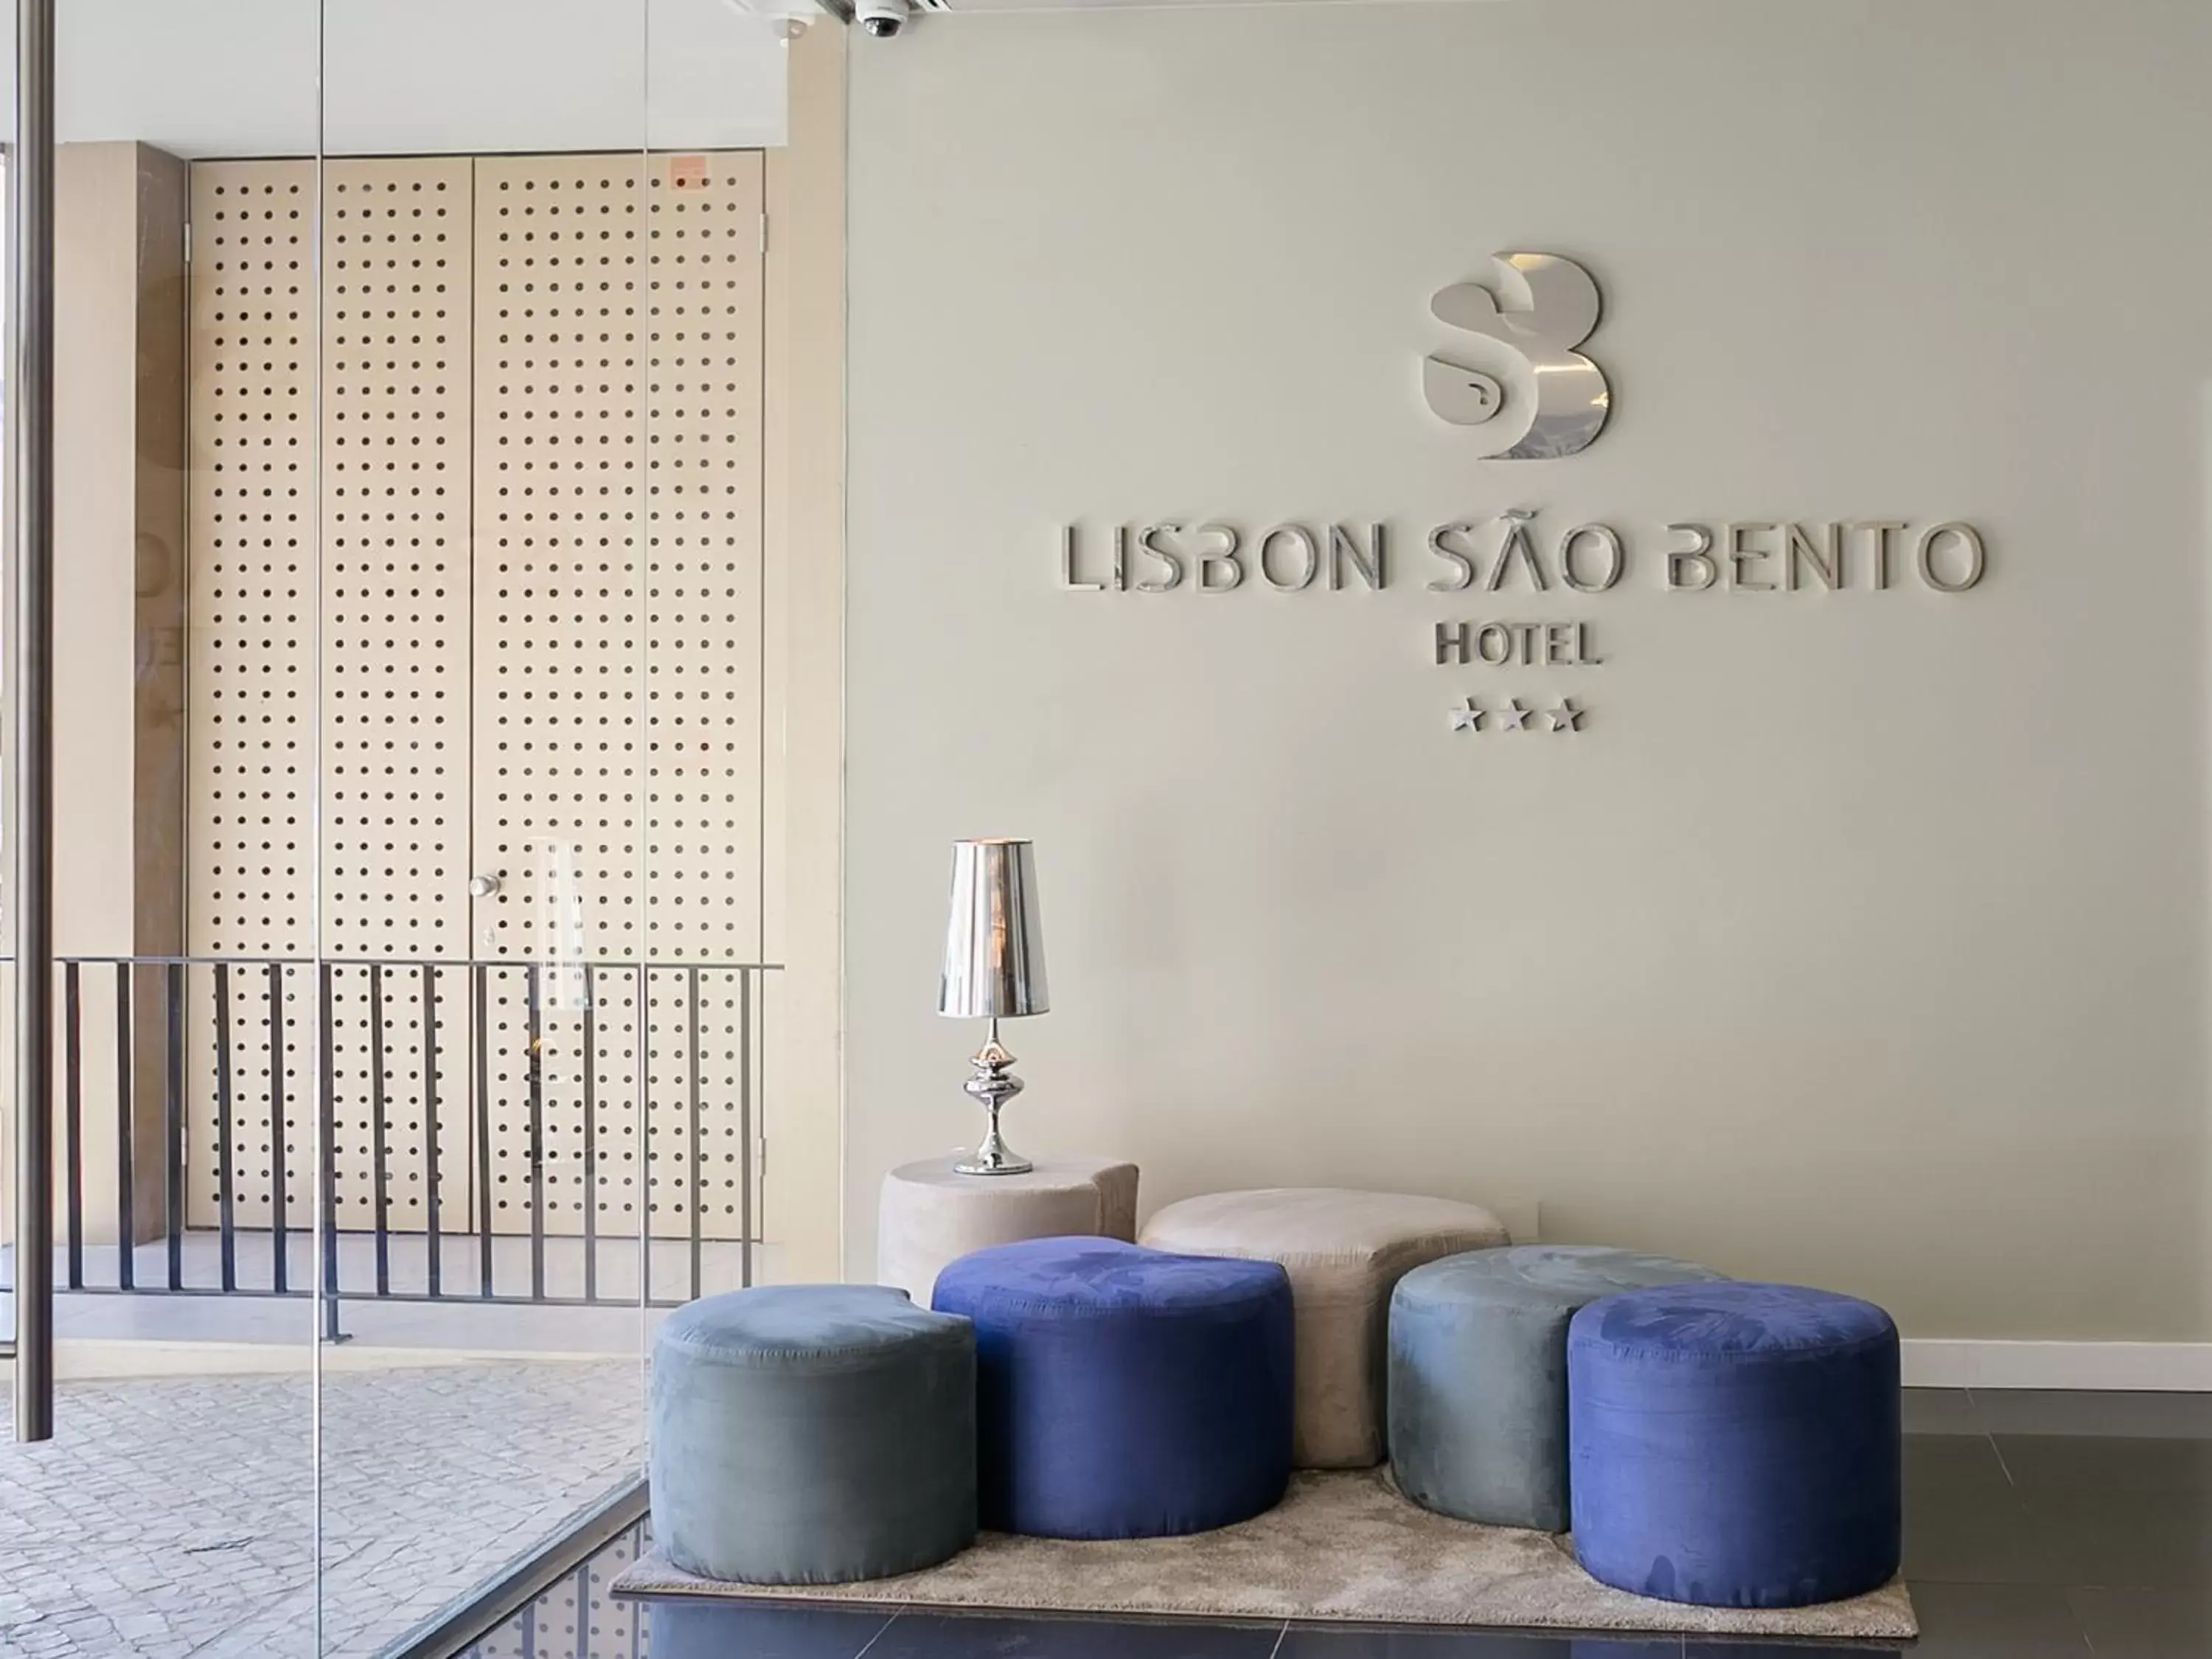 Lobby or reception in Lisbon Sao Bento Hotel